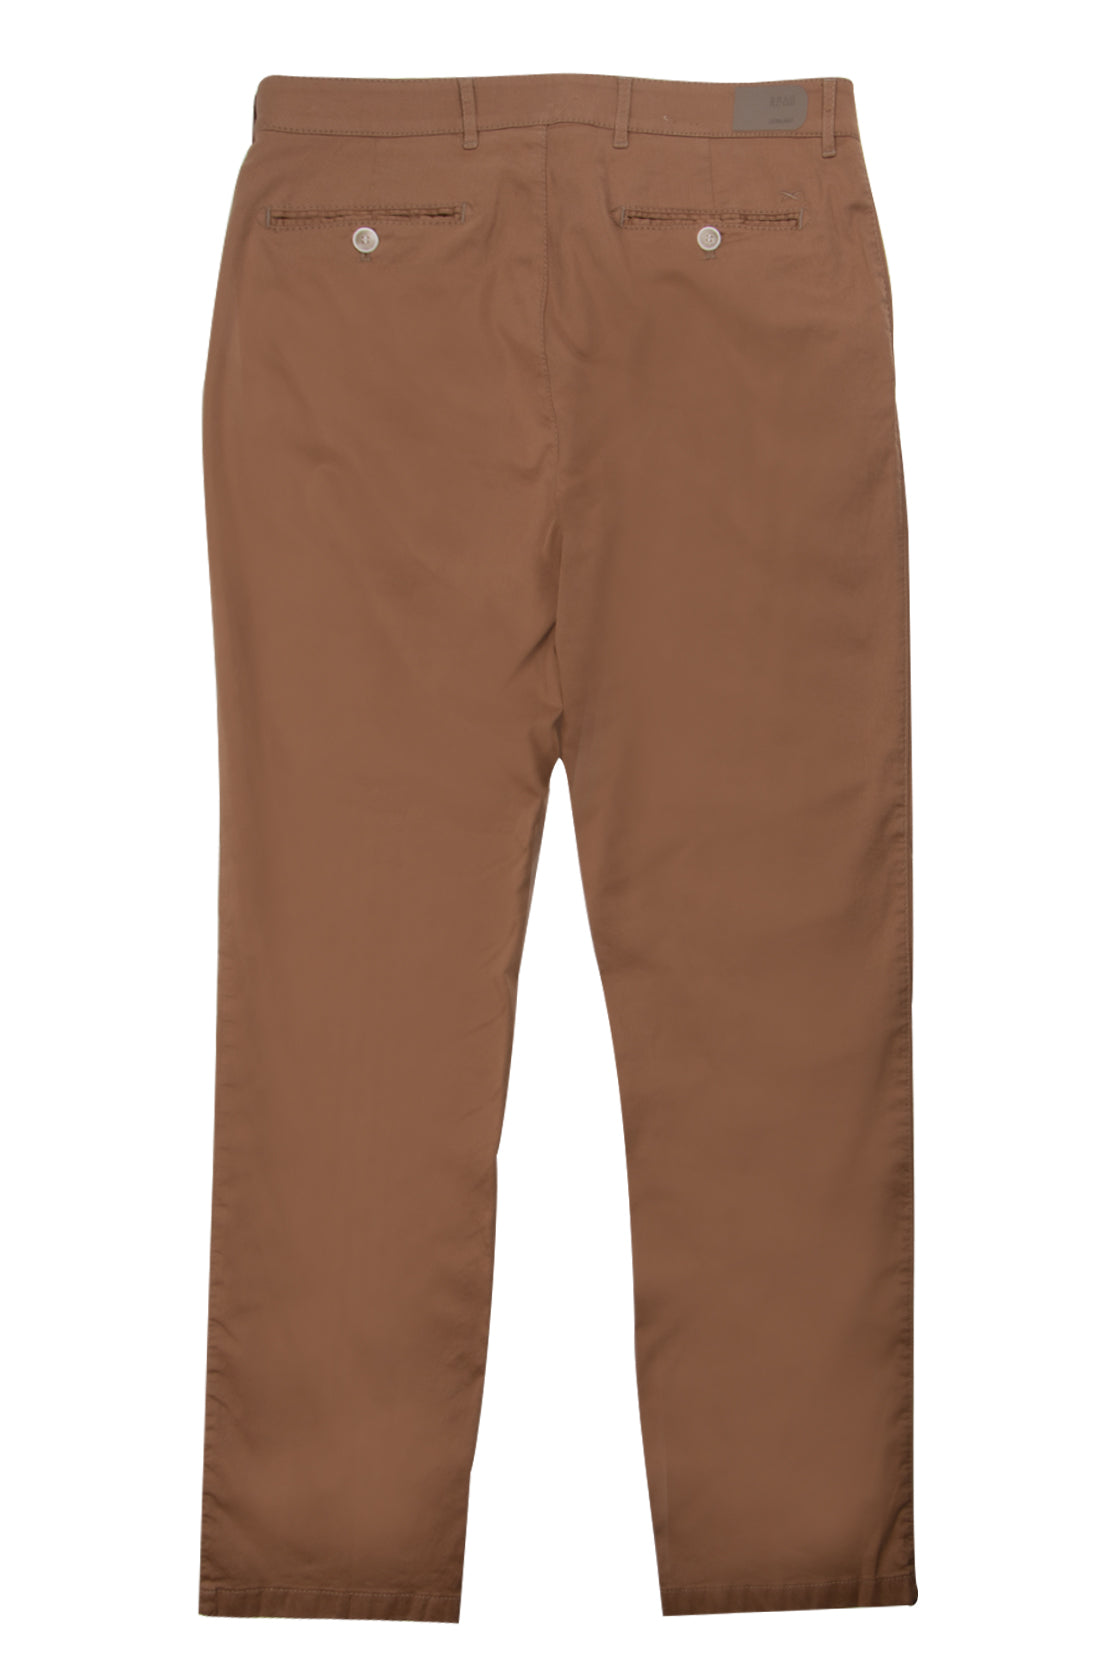 Brax Everest Cotton Trouser 34L Clay